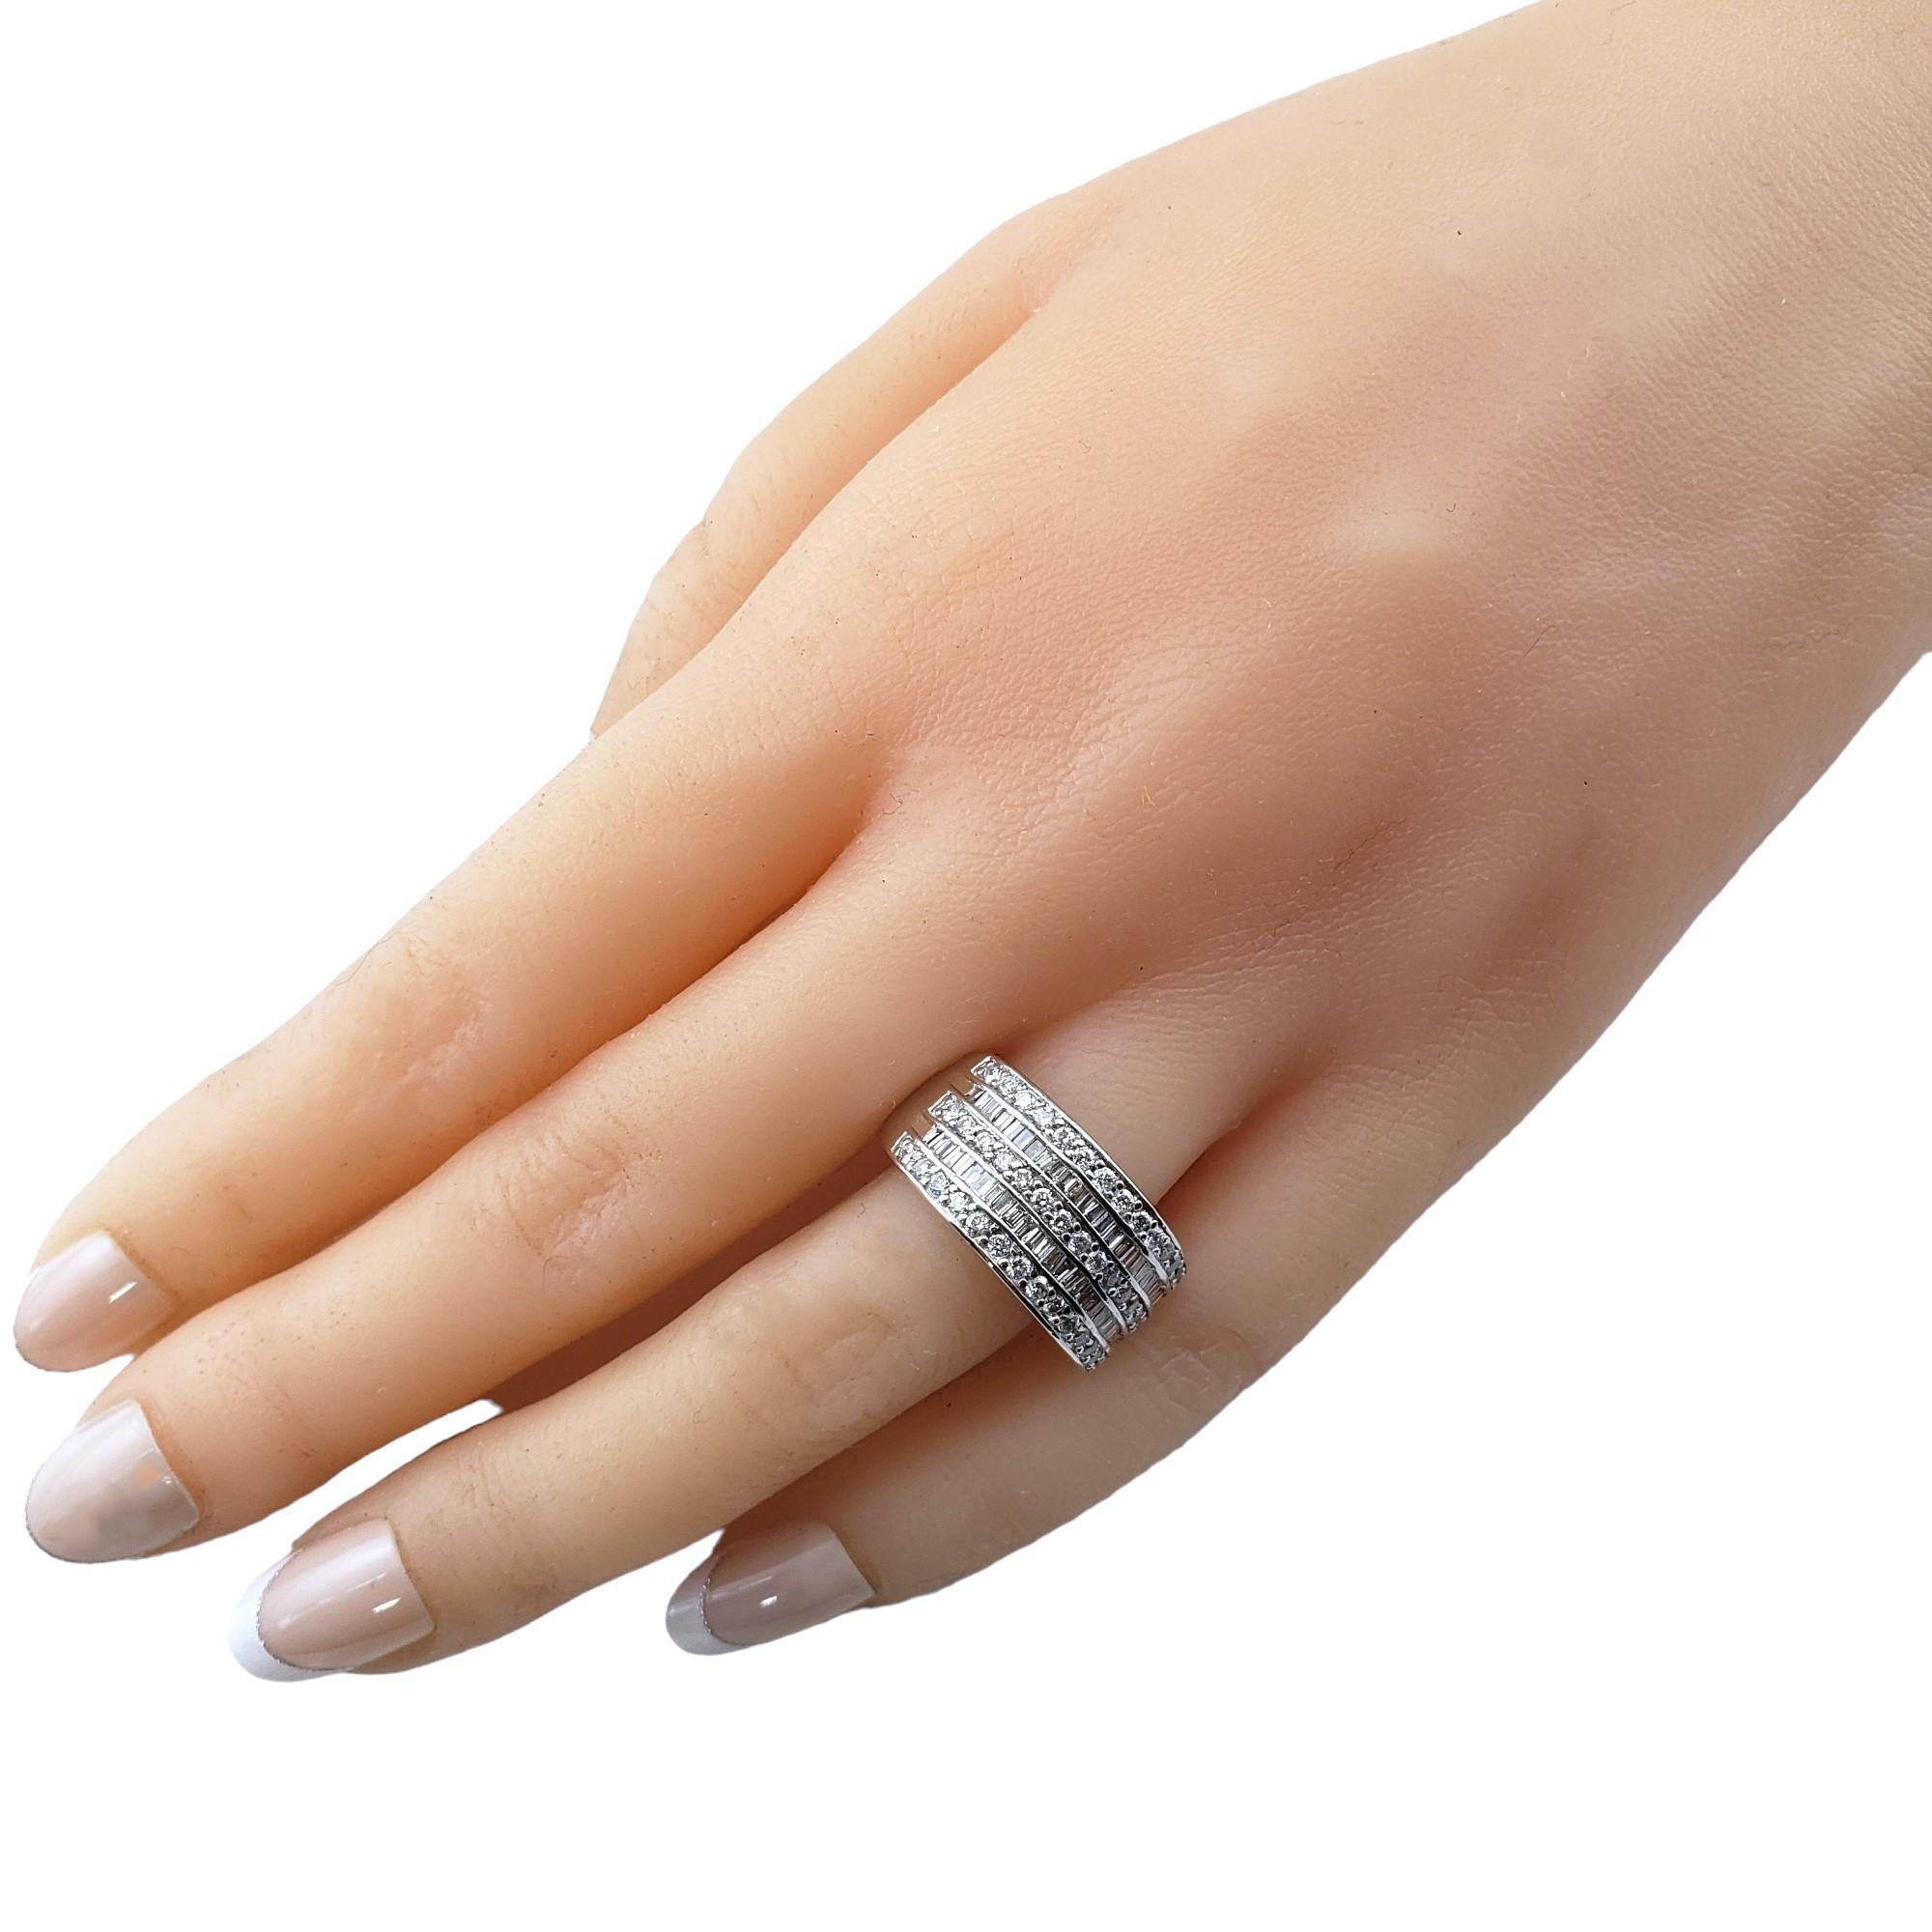  14K White Gold Diamond Ring Size 7 #15375 For Sale 3